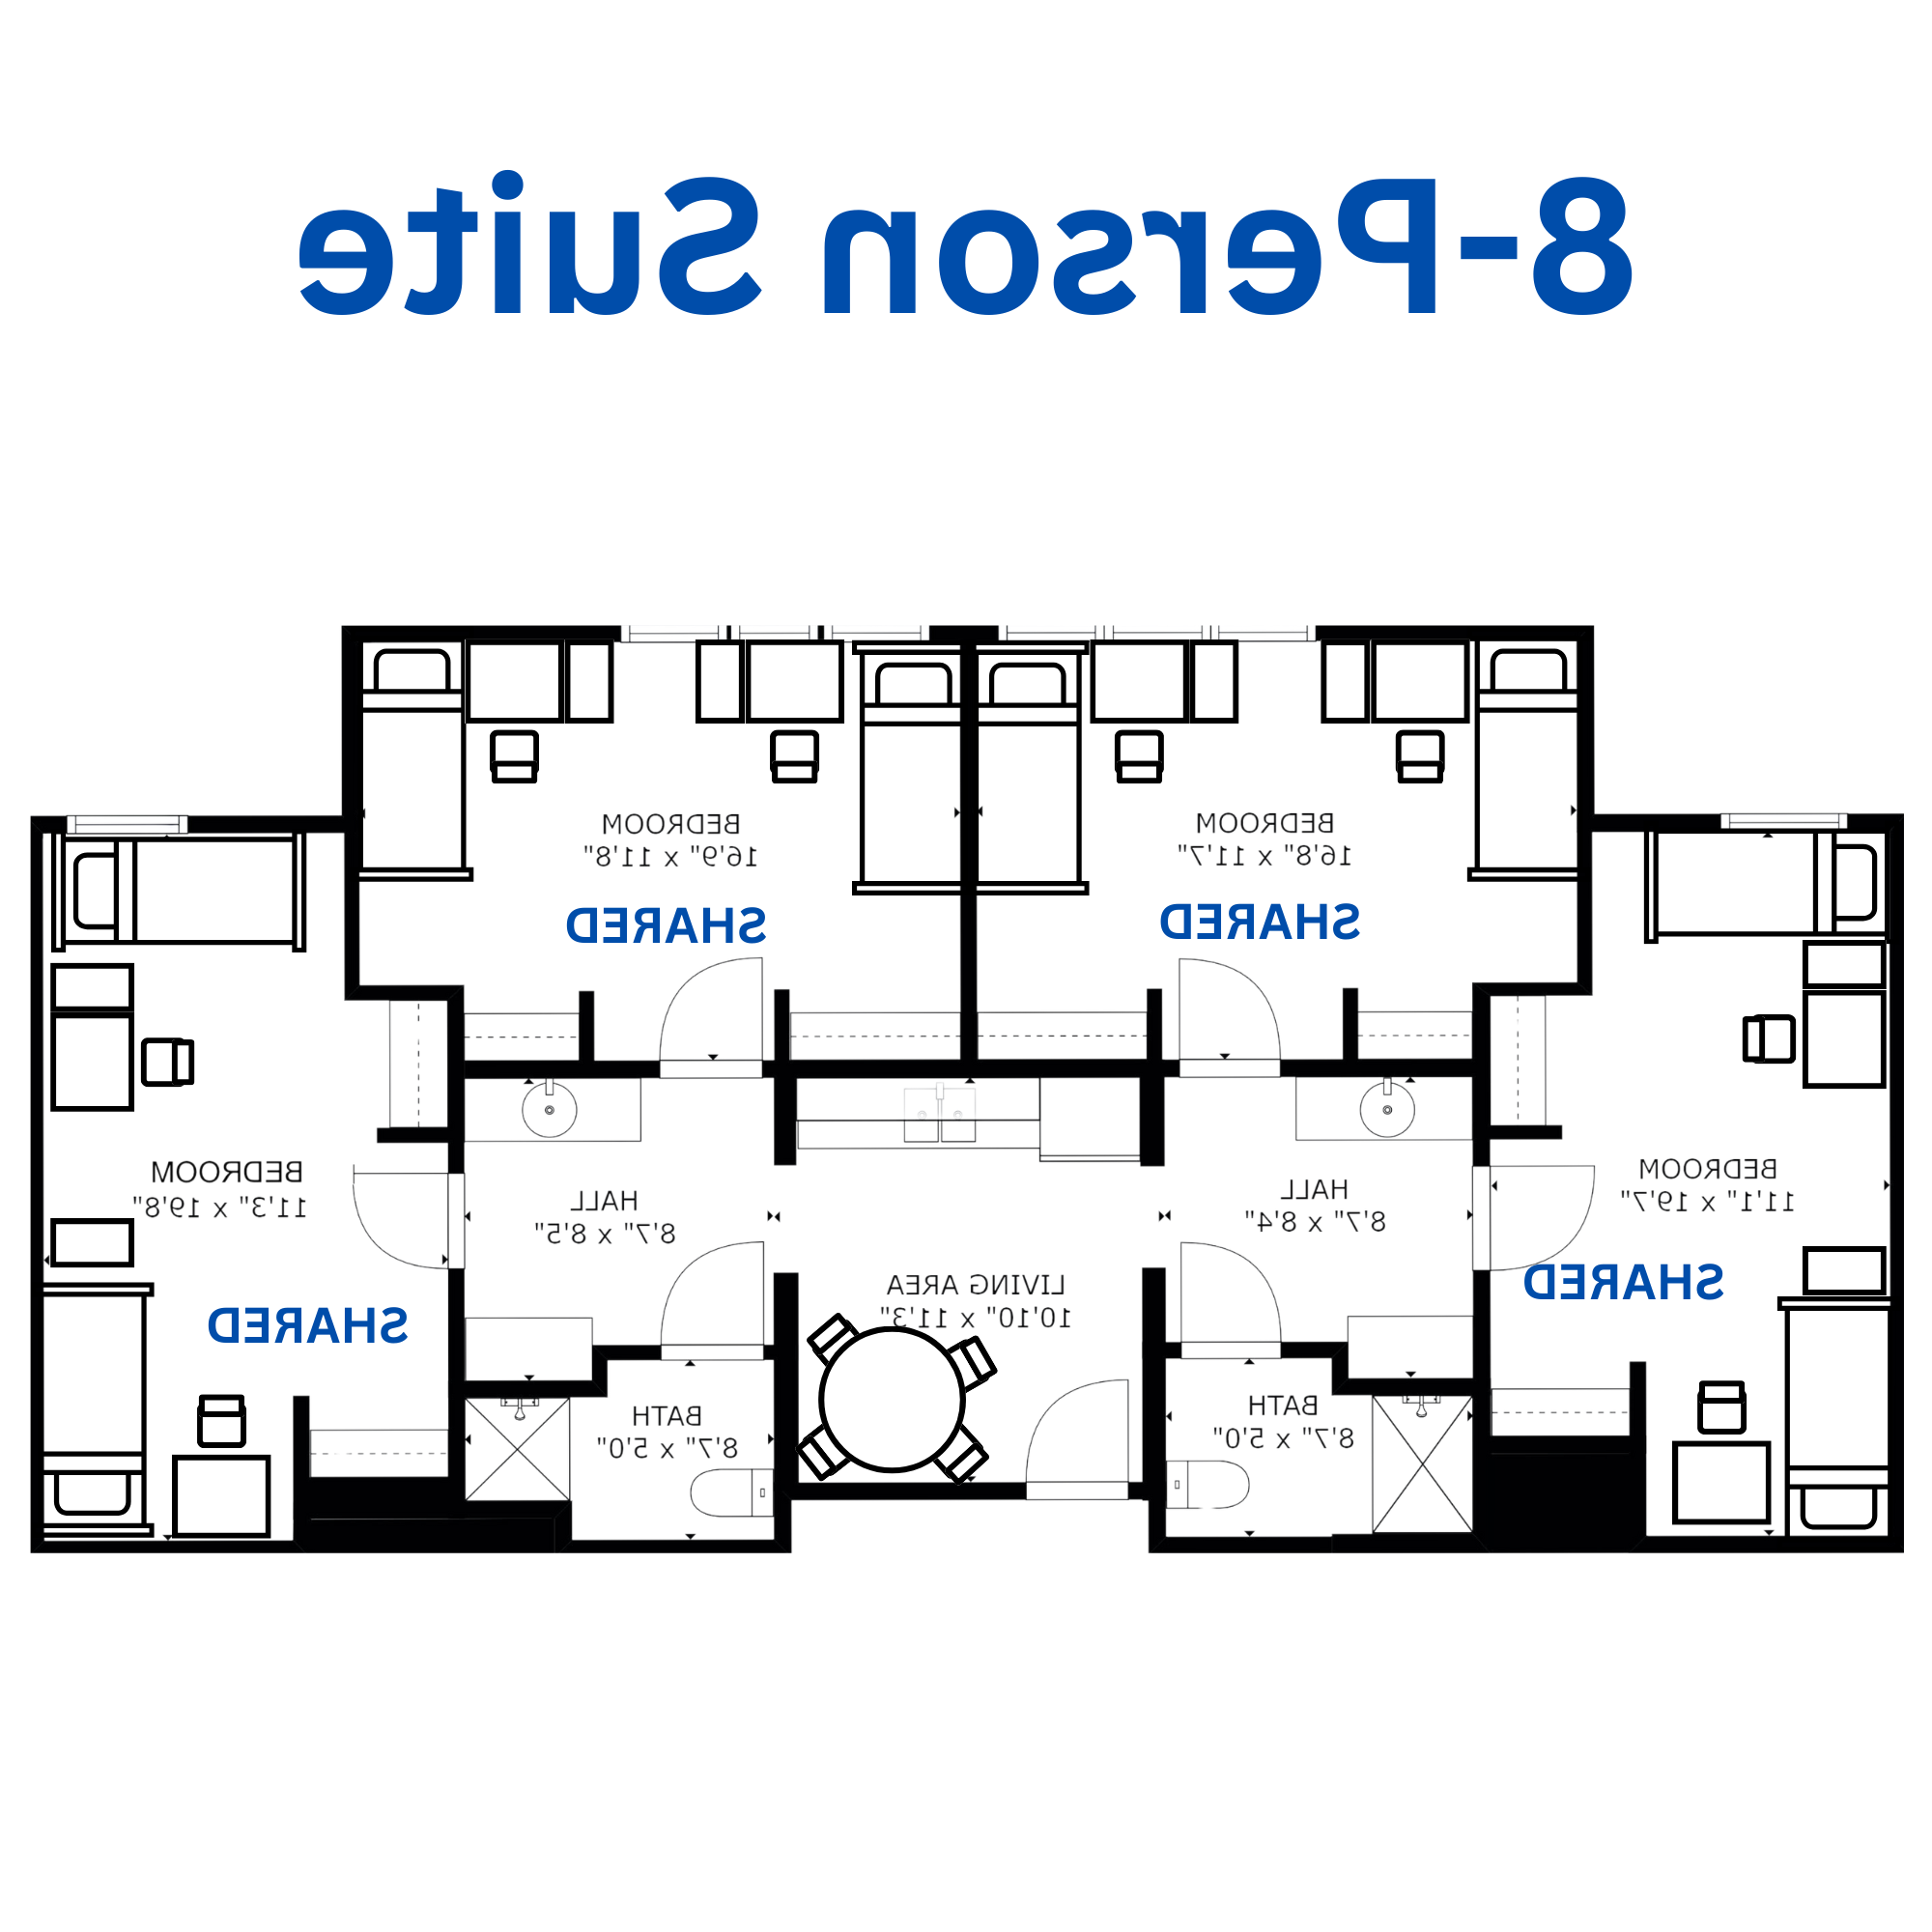 8-Person Suite Floor Plan